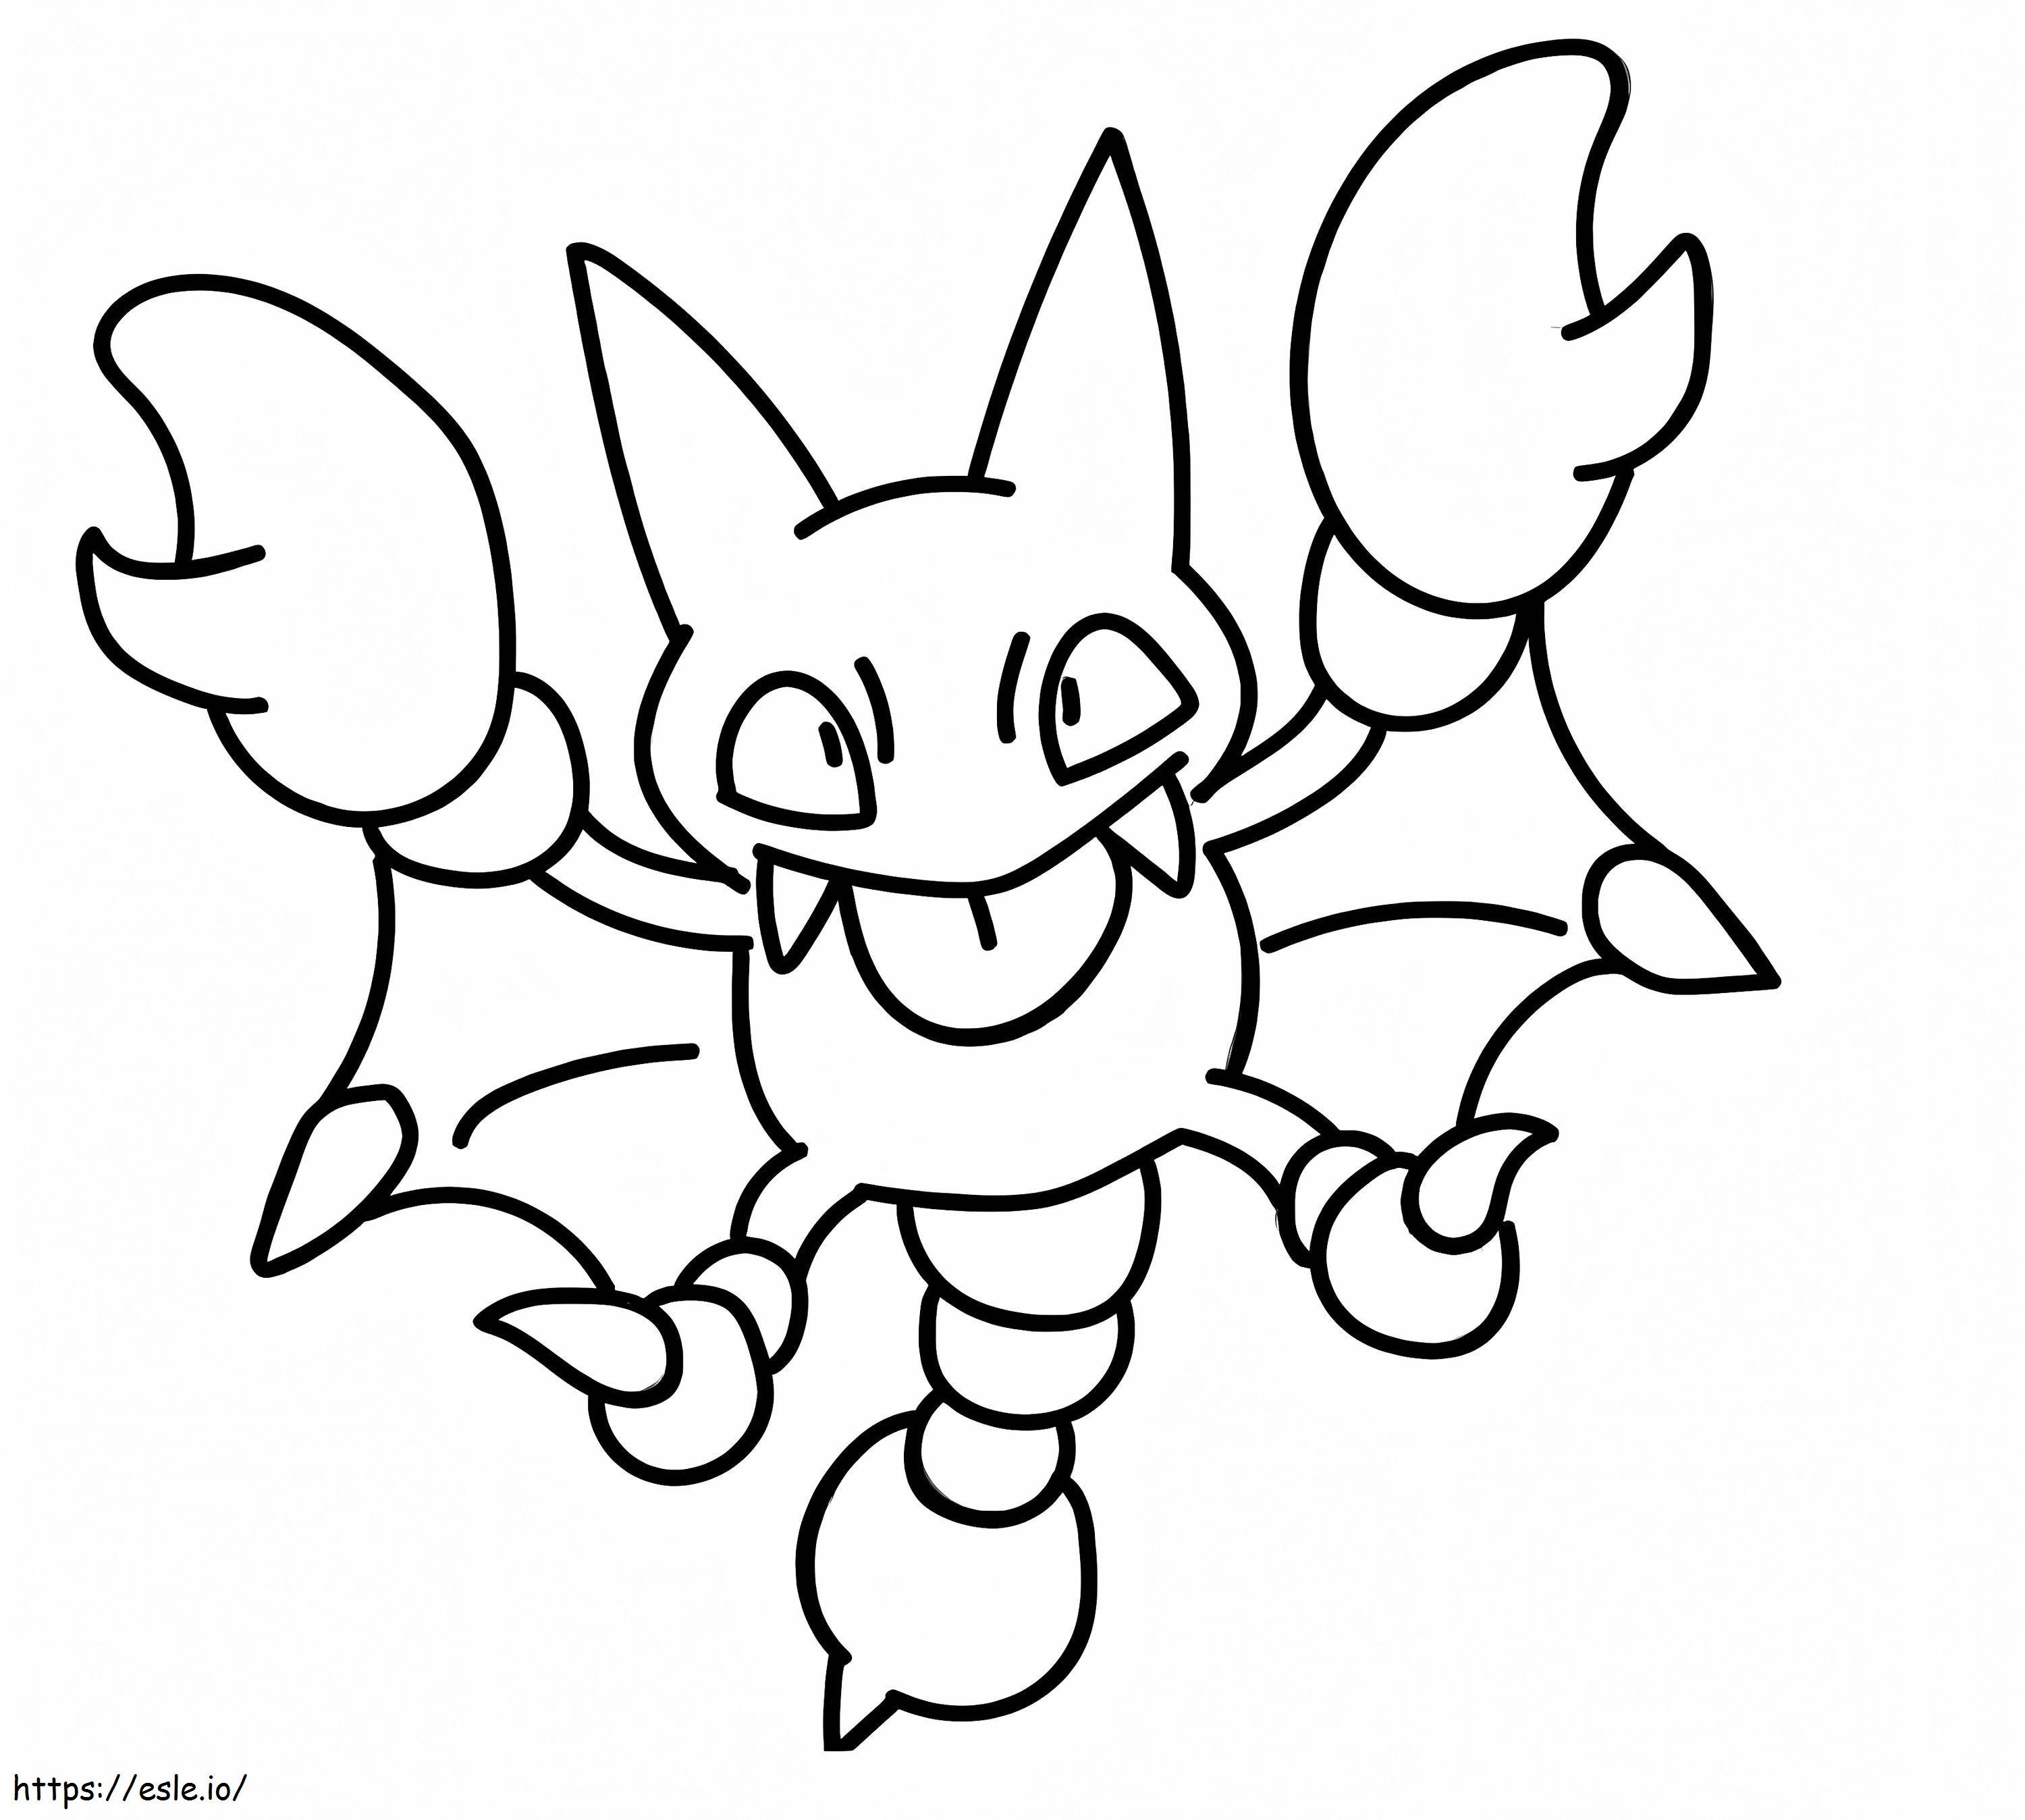 Printable Gligar Pokemon coloring page